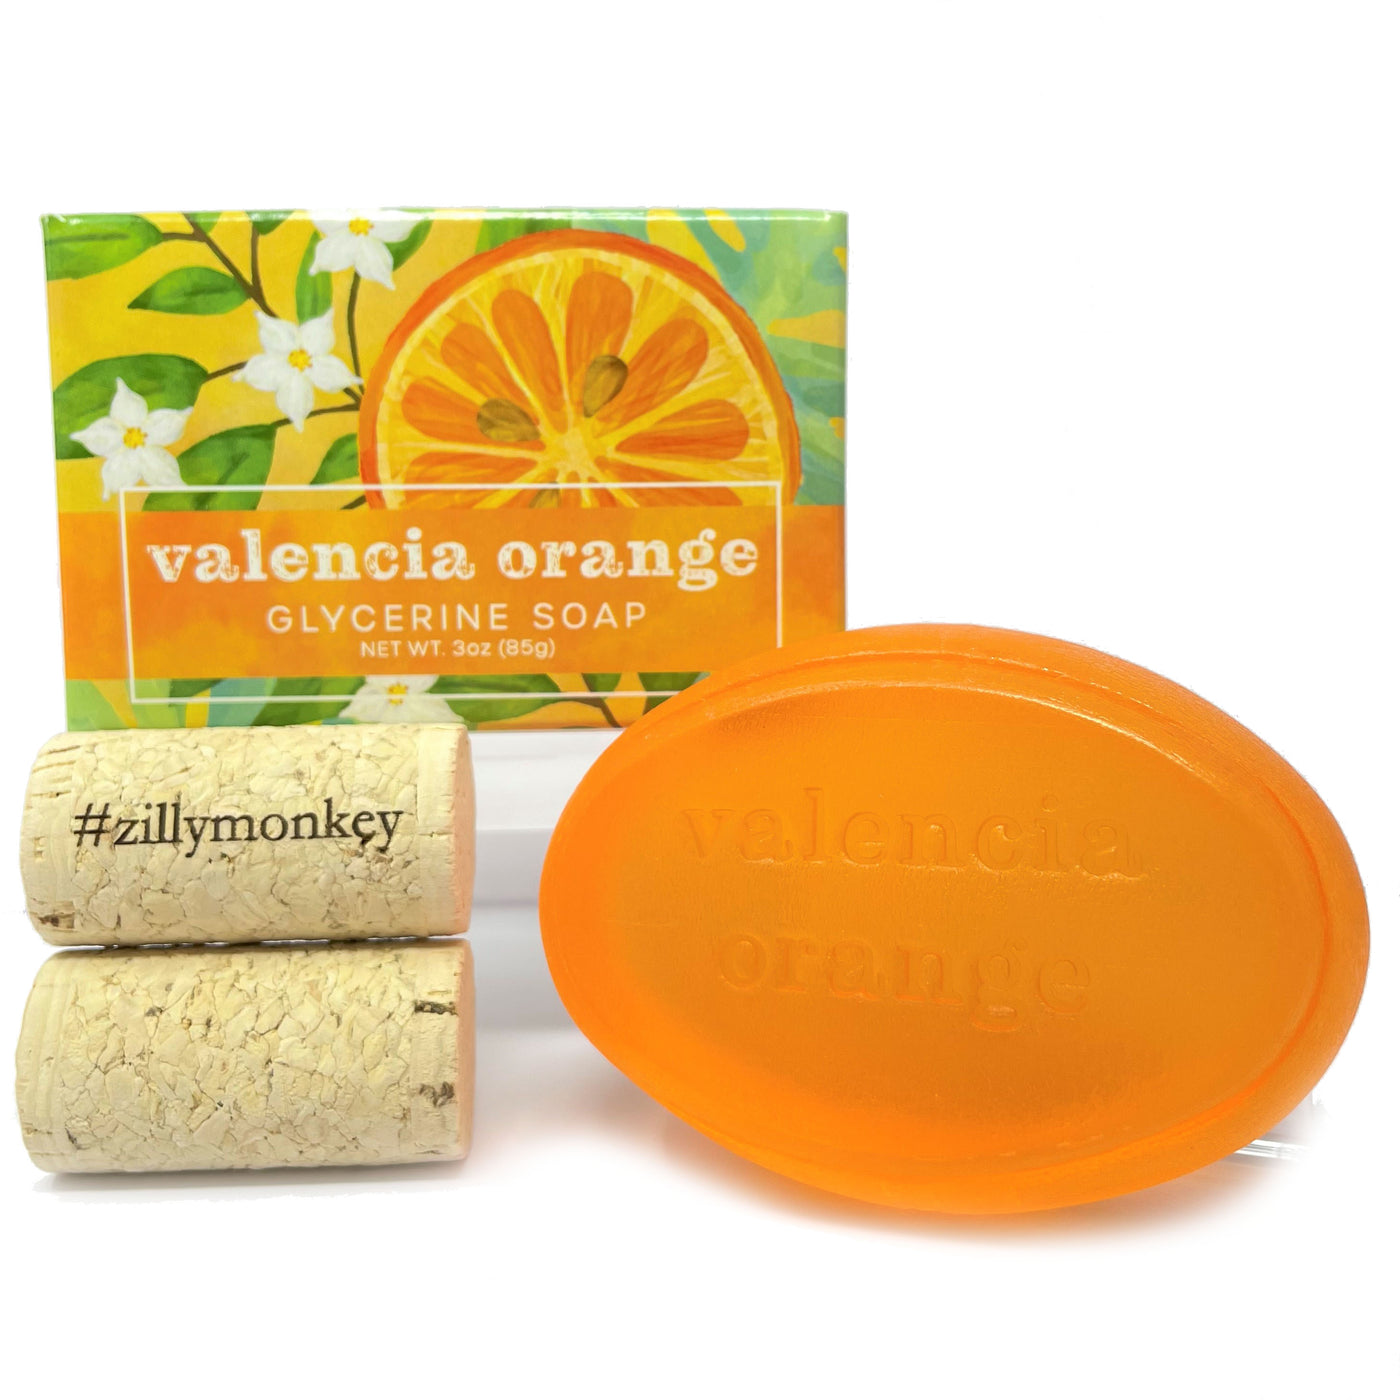 Valencia Orange Glycerine Soap Bar by Greenwich Bay Trading Company